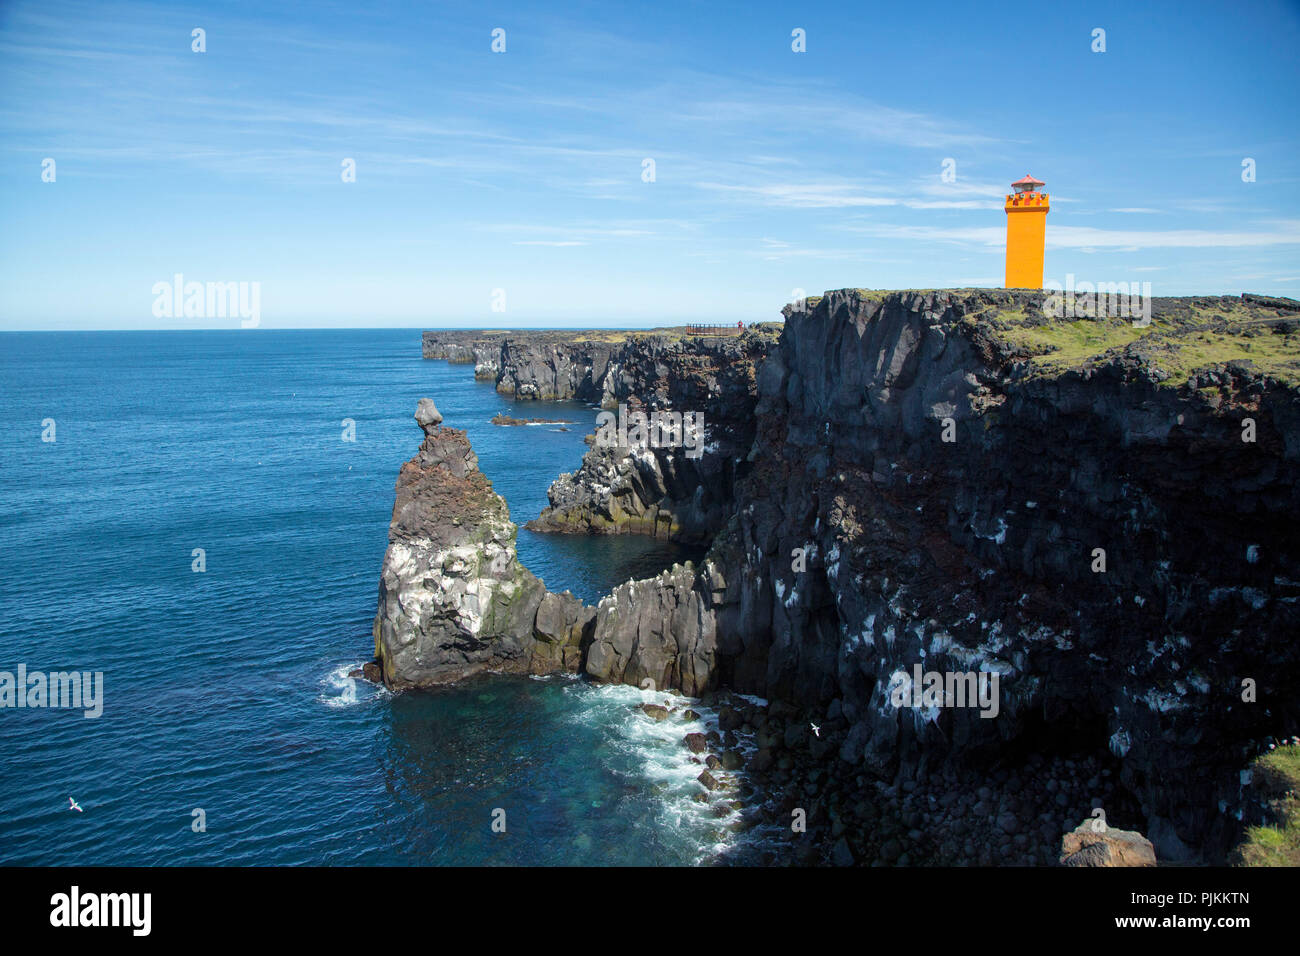 Iceland, Snaefellsness peninsula, yellow lighthouse at Hellissandur, black cliffs, Stock Photo